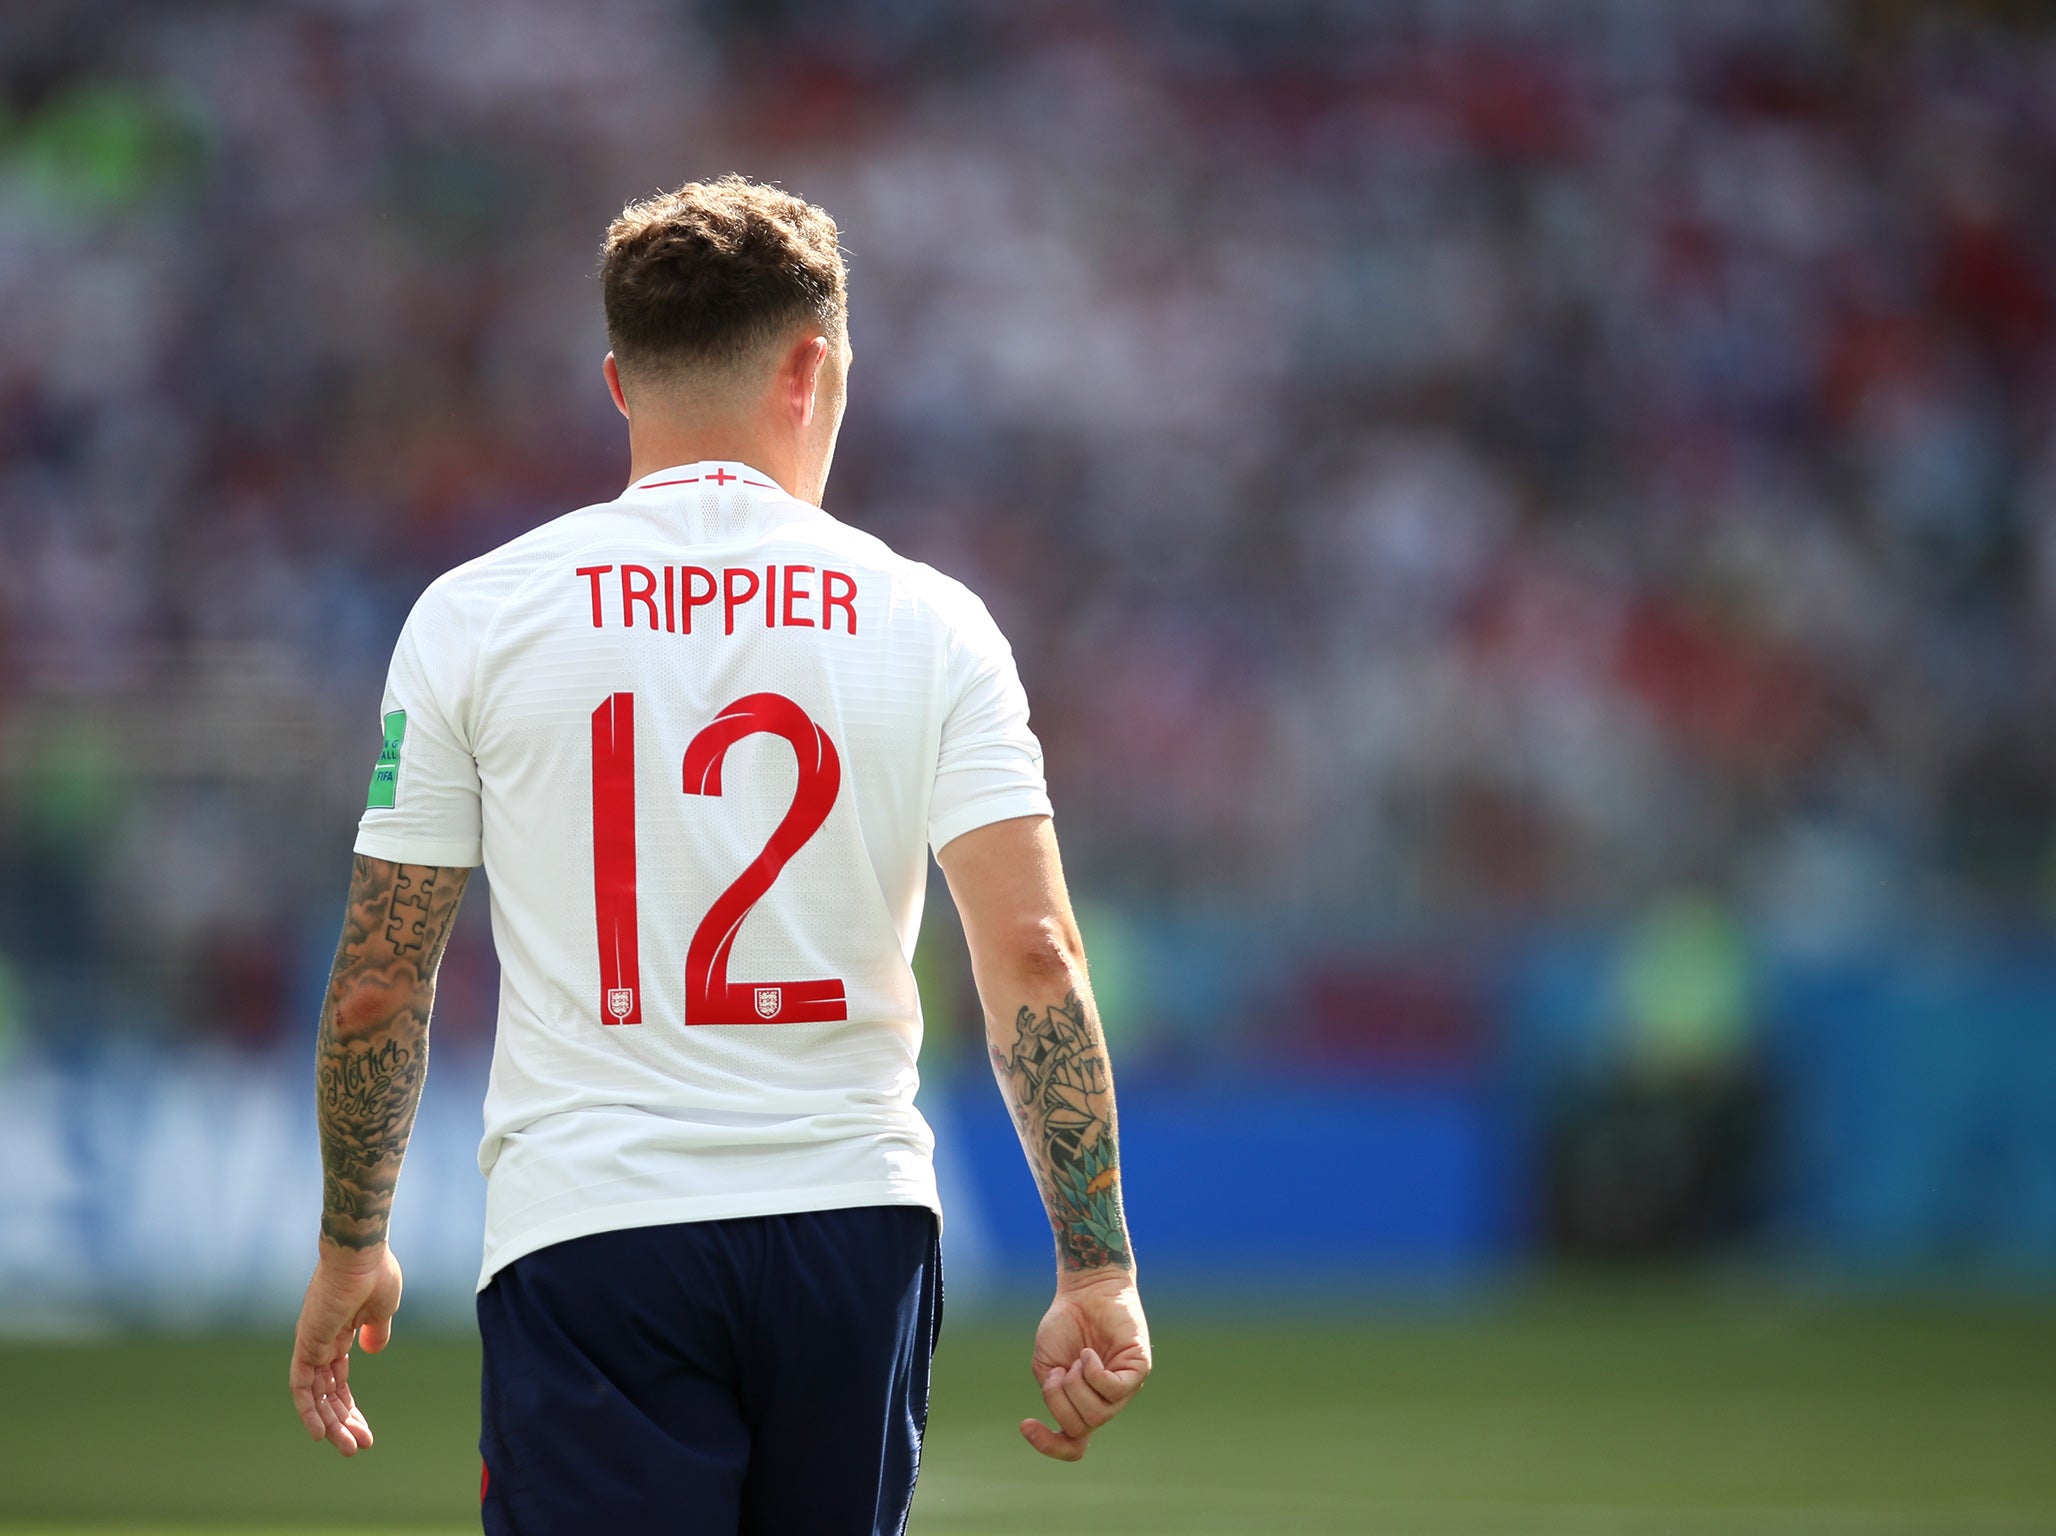 Kieran Trippier has impressed at the World Cup